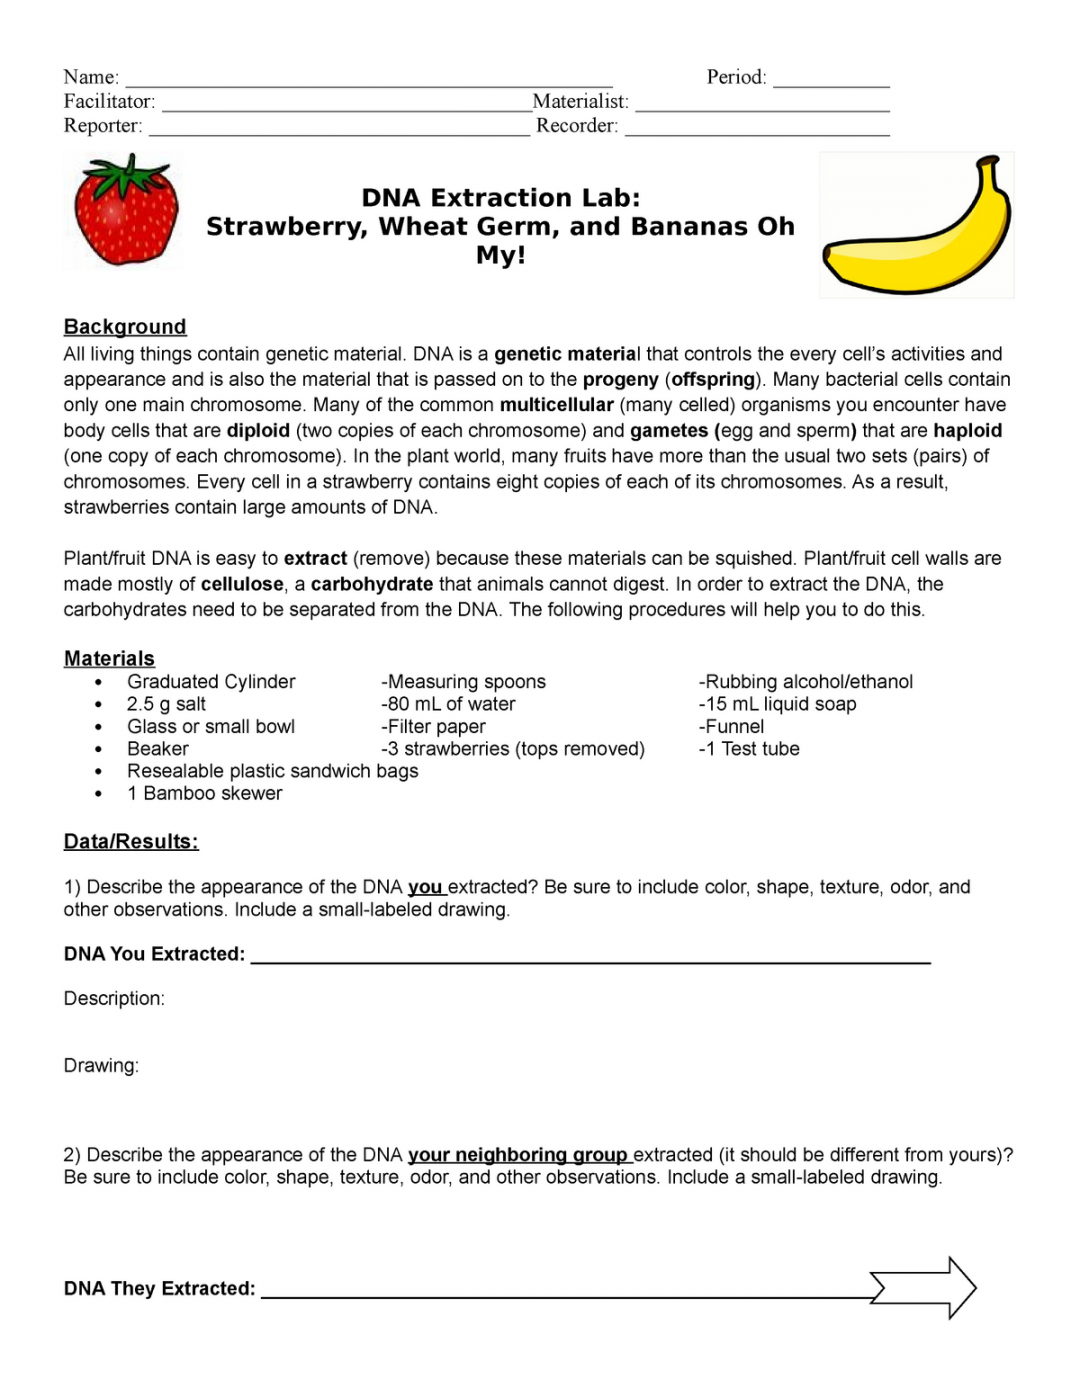 Strawberry DNA Extraction Lab Revised - Facilitator: : - Studocu